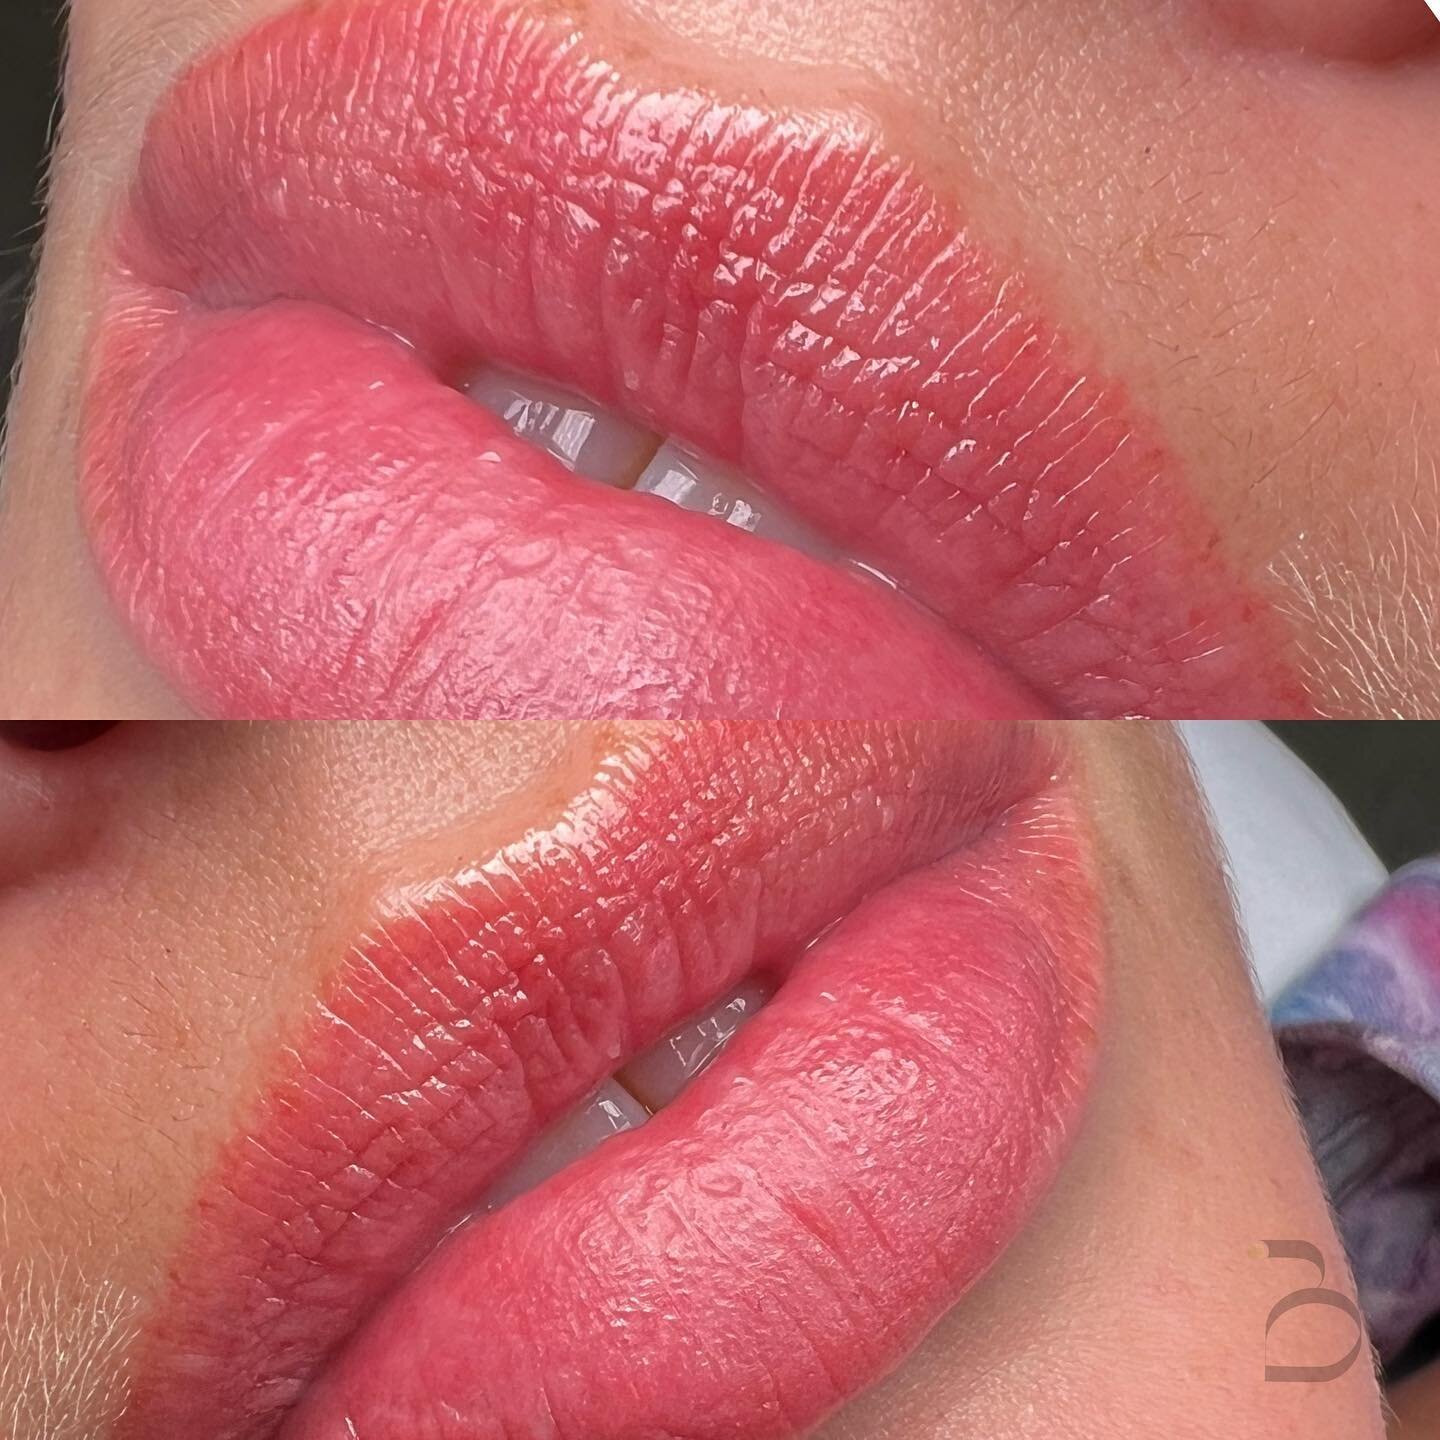 HEALED lips 👄 

Lip blush tattoo by Mandy